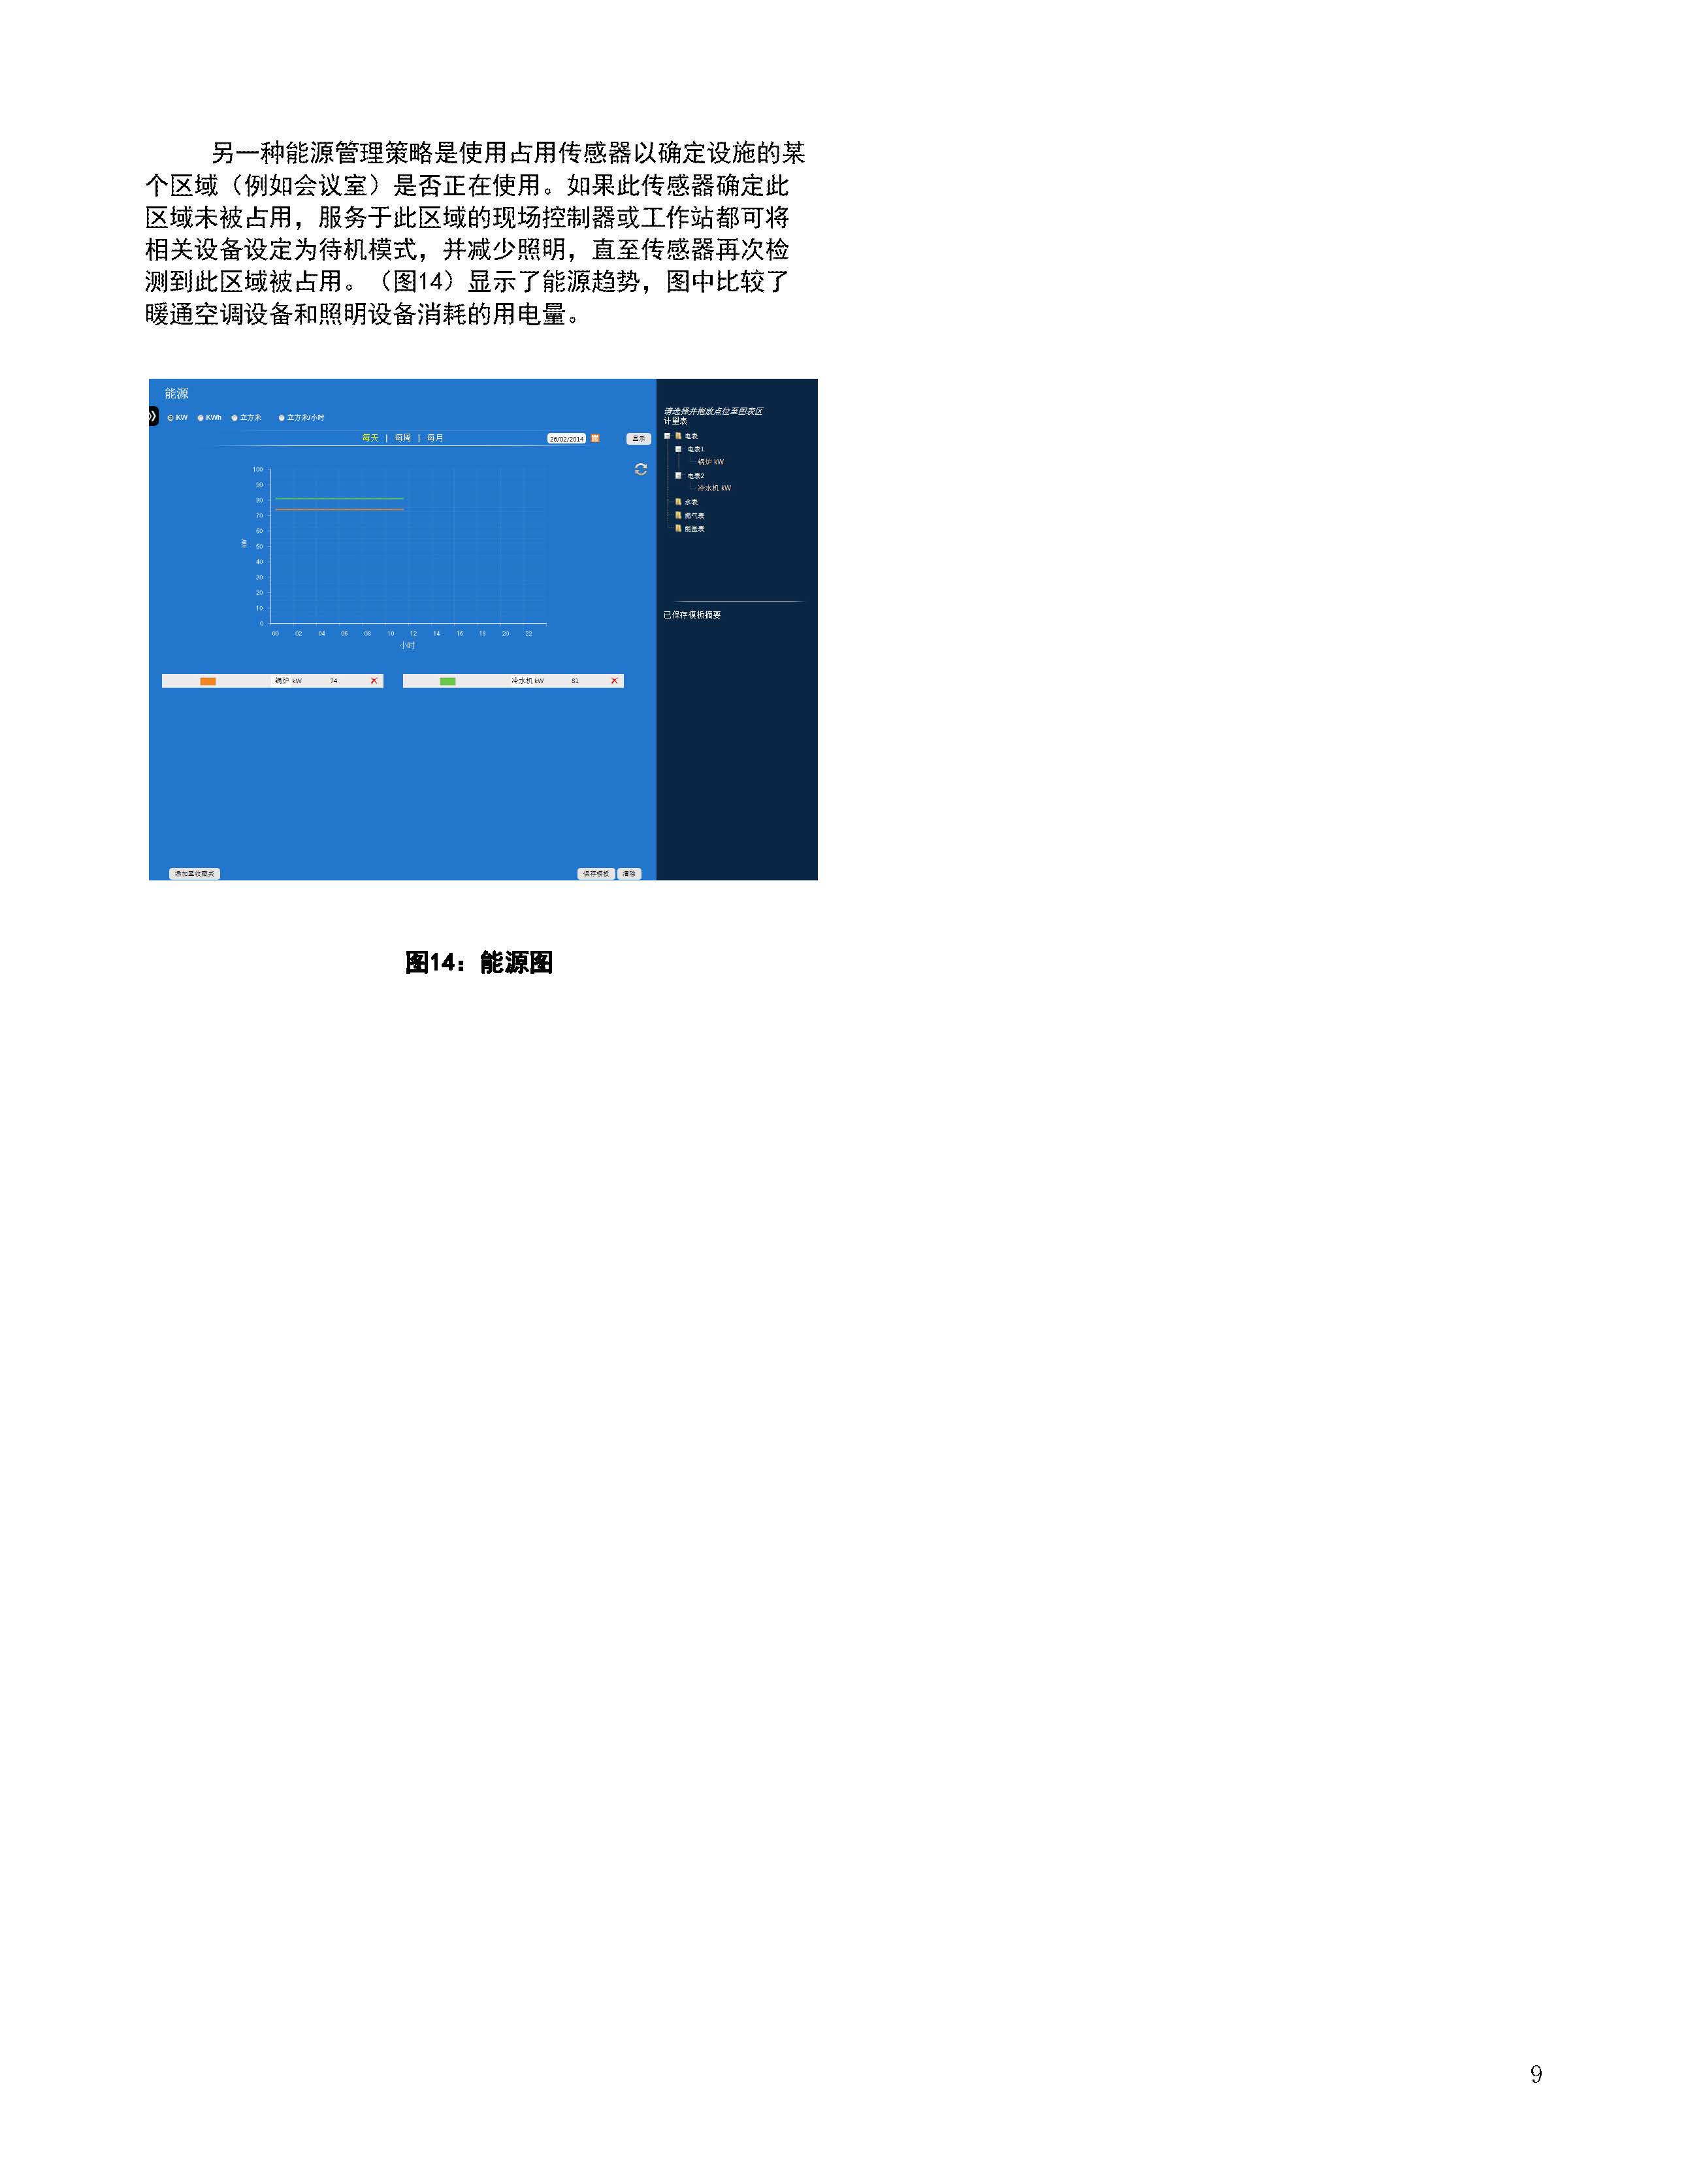 bcm系统设计手册_页面_09.jpg